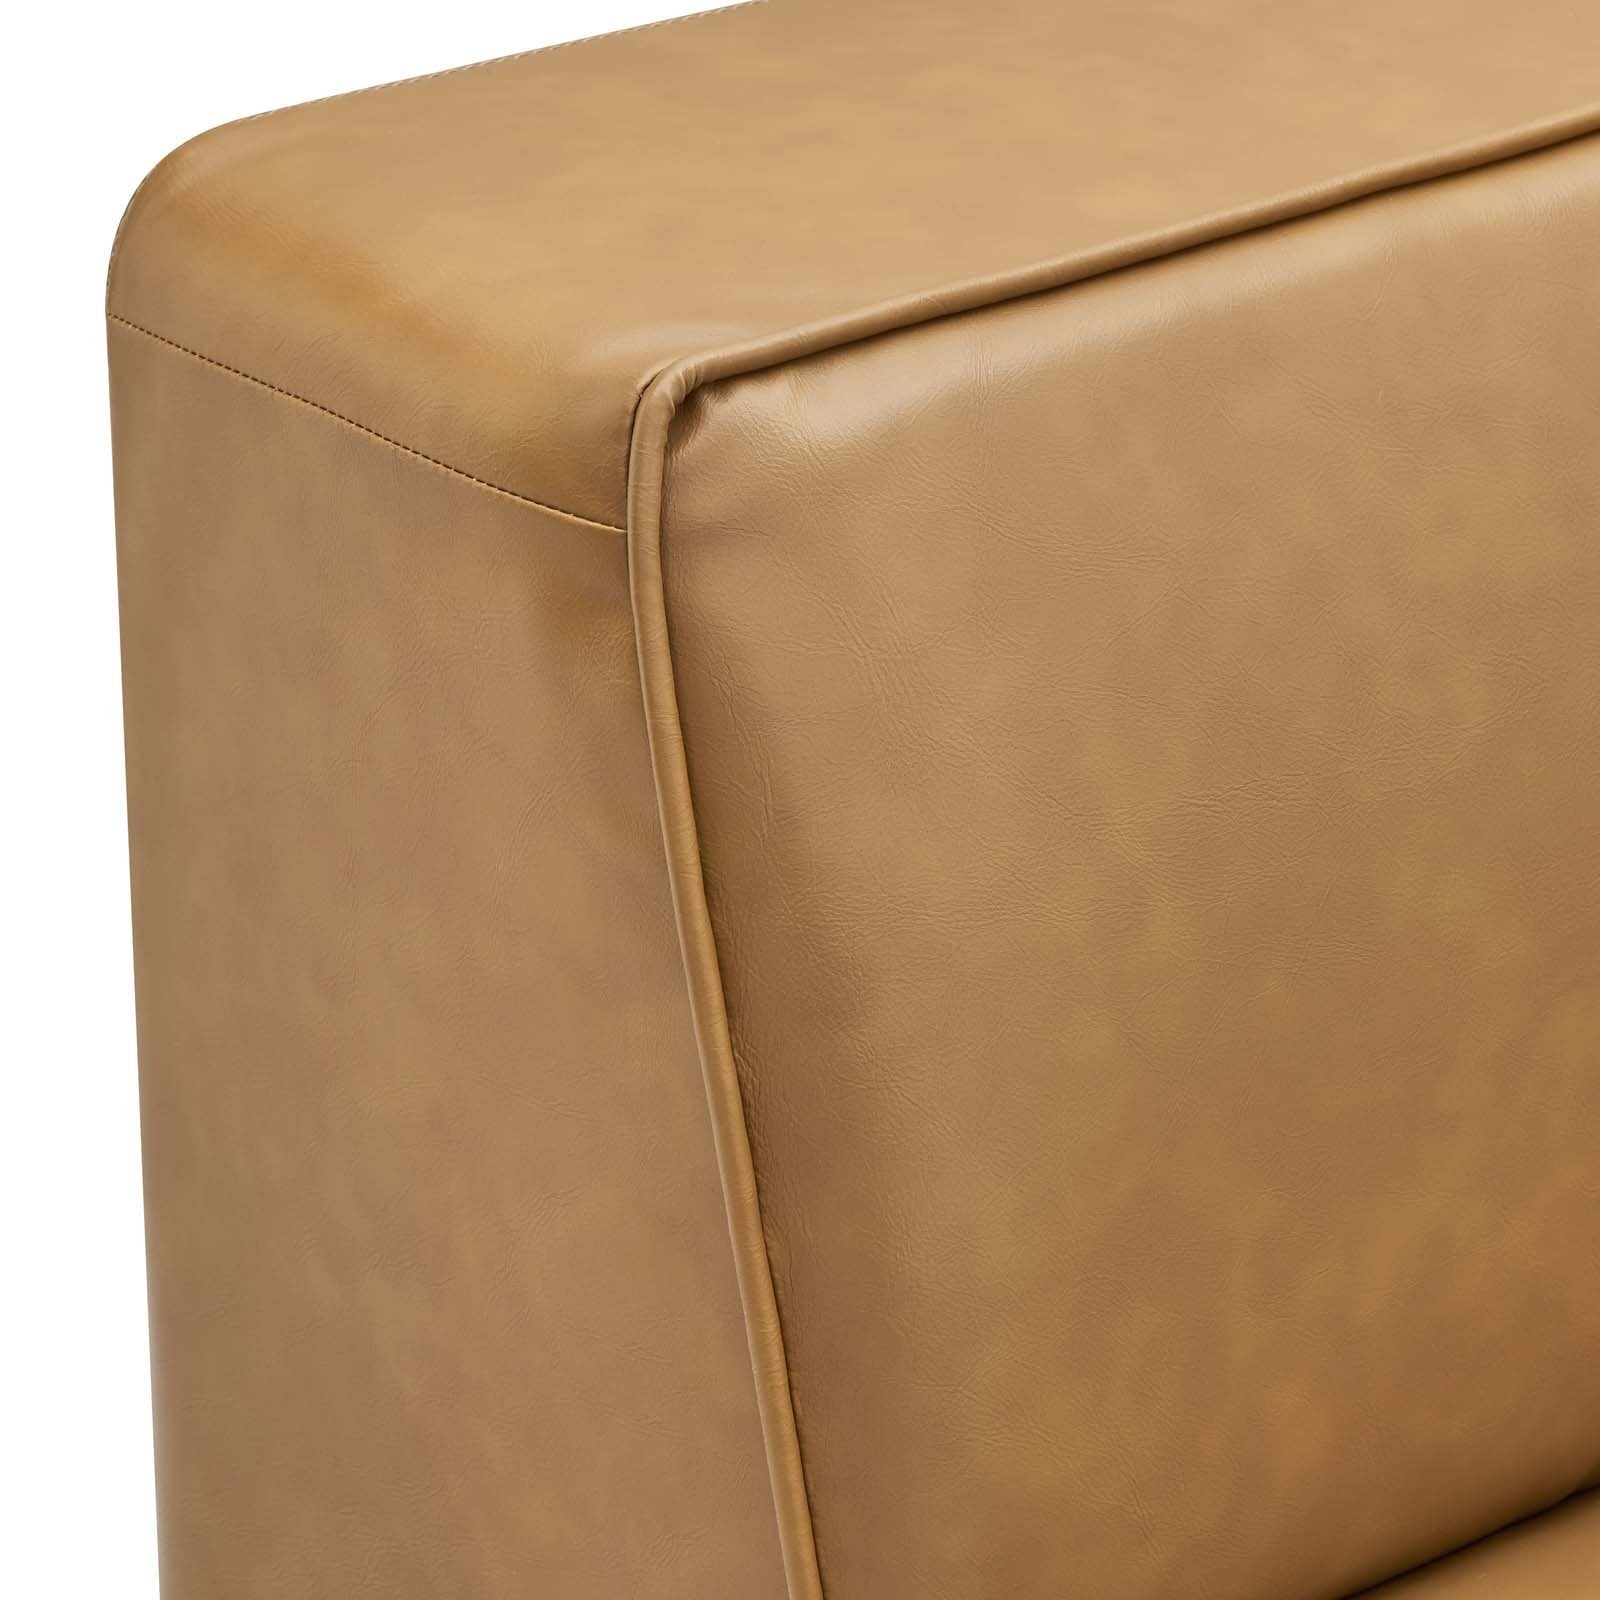 Mingle Vegan Leather 7-Piece Sectional Sofa - East Shore Modern Home Furnishings